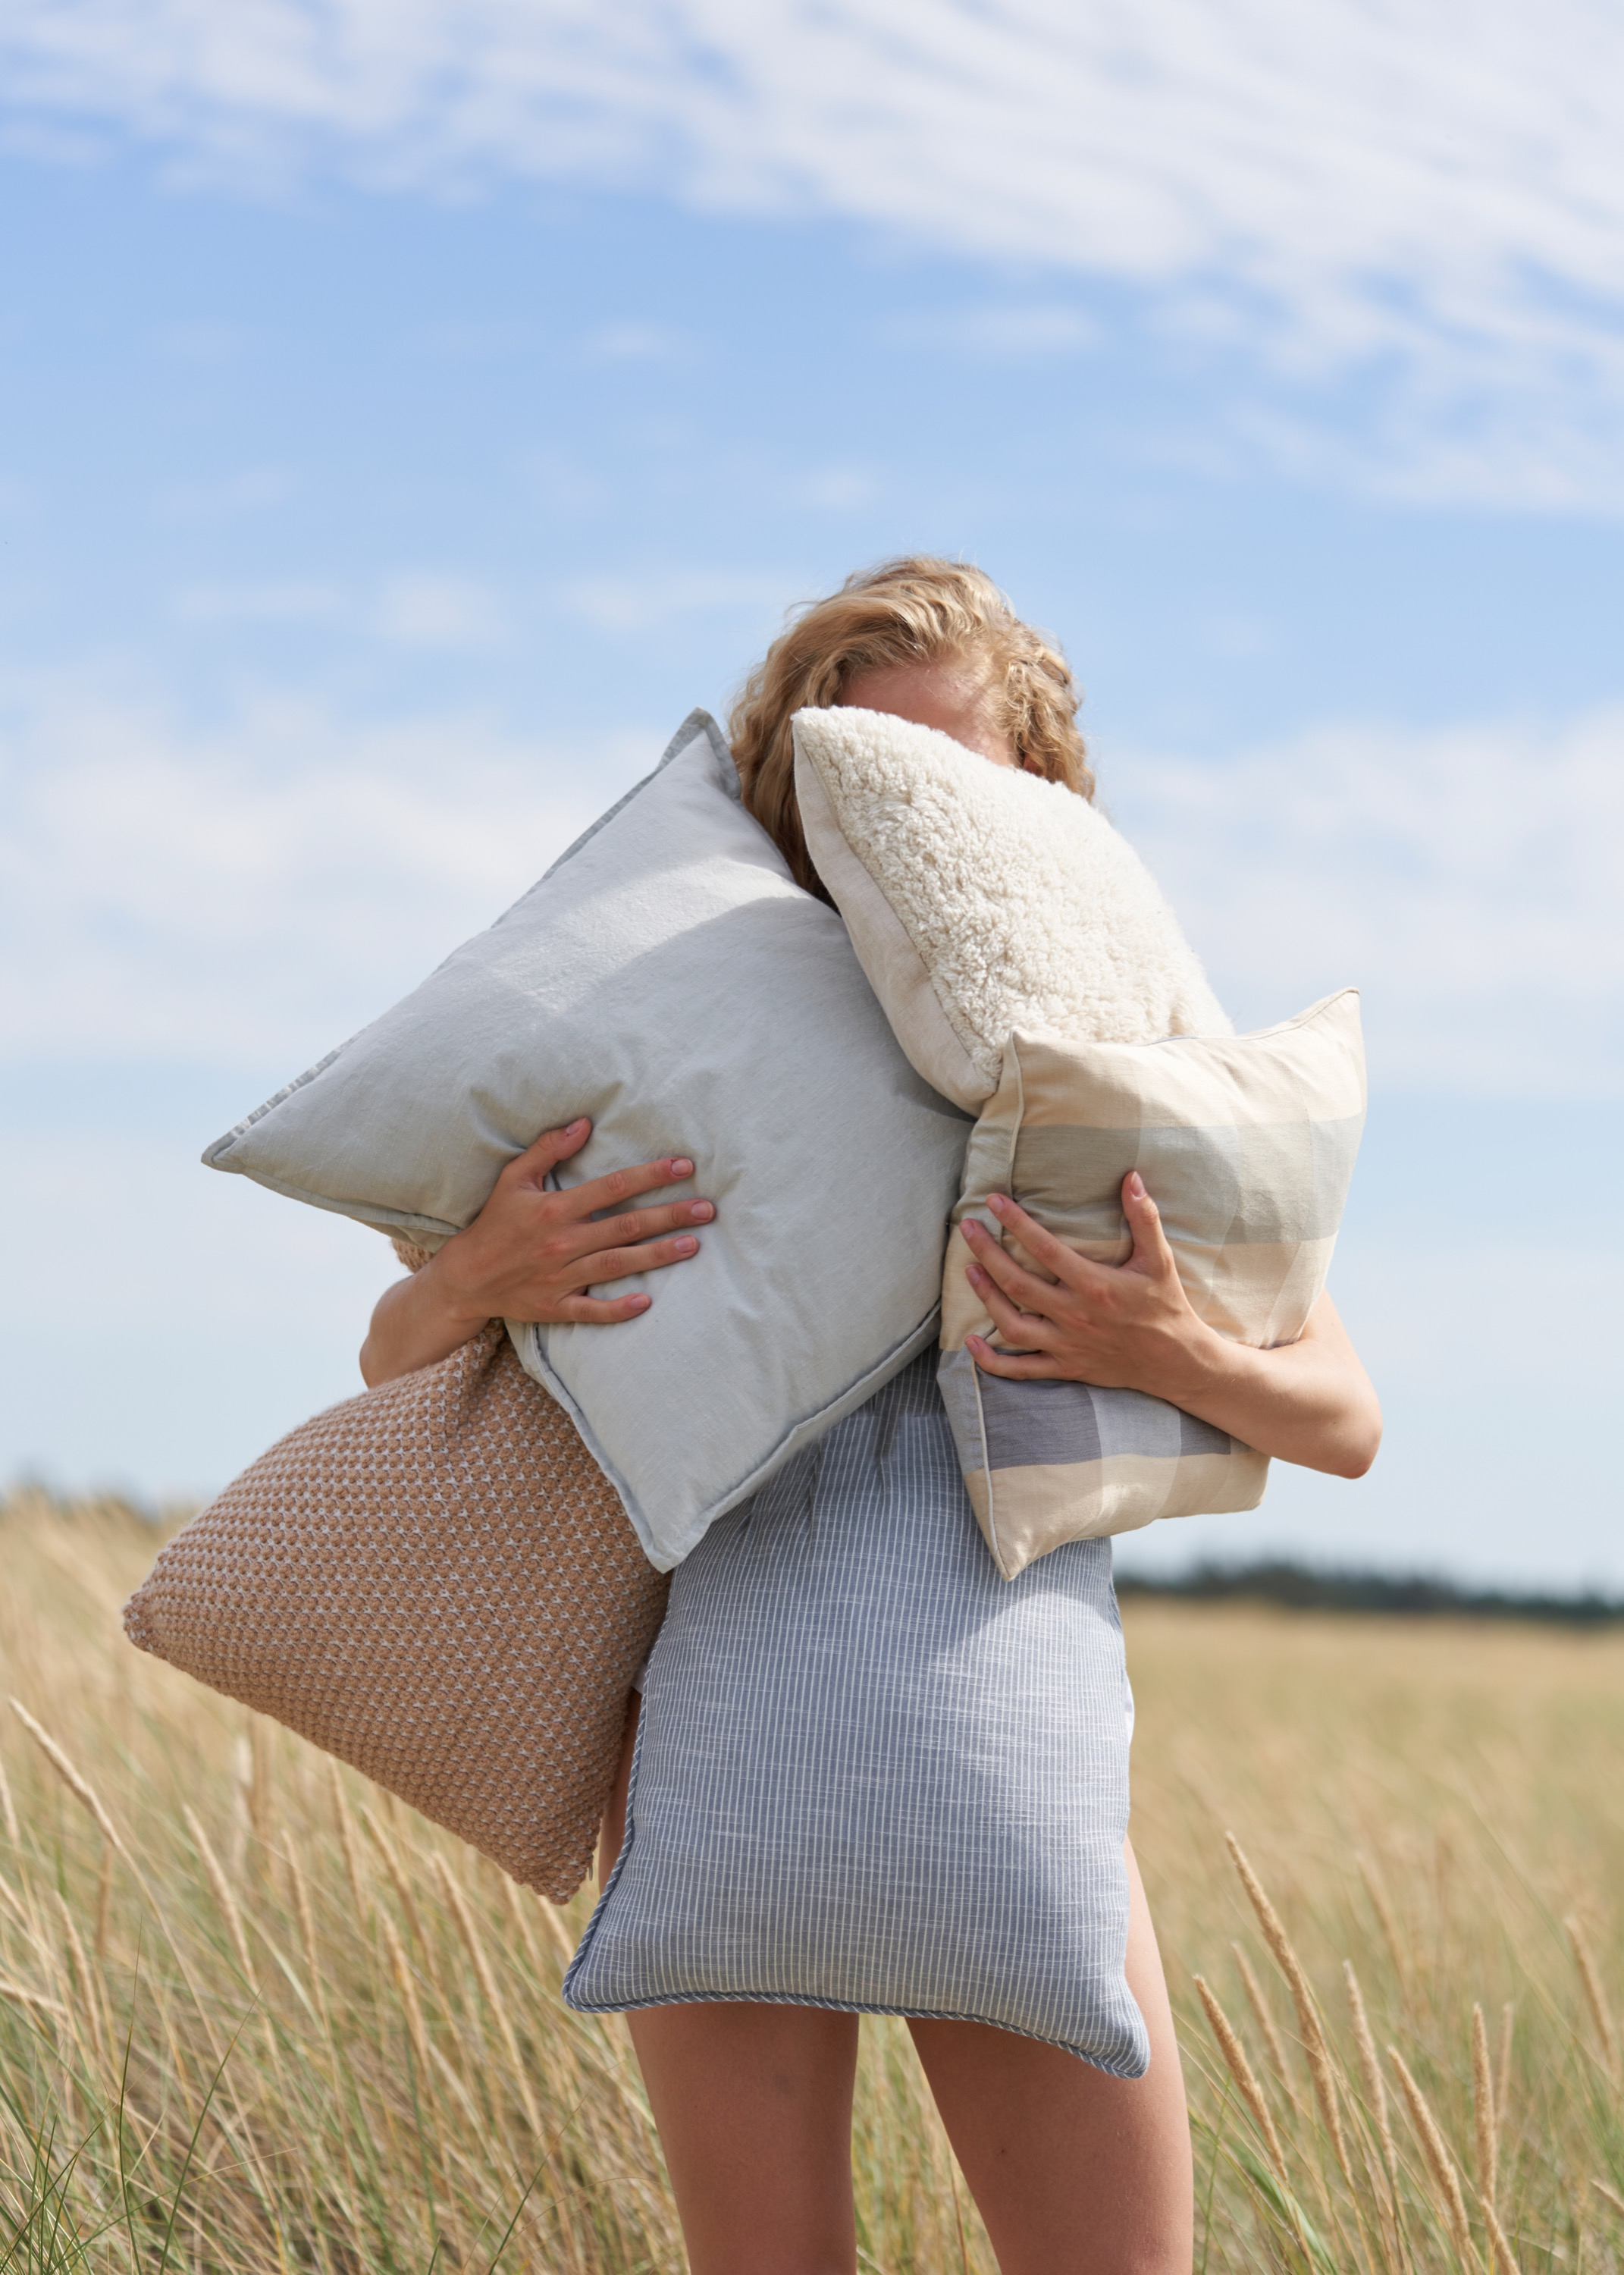 Cushions - Heather Classic pillow (40x60)